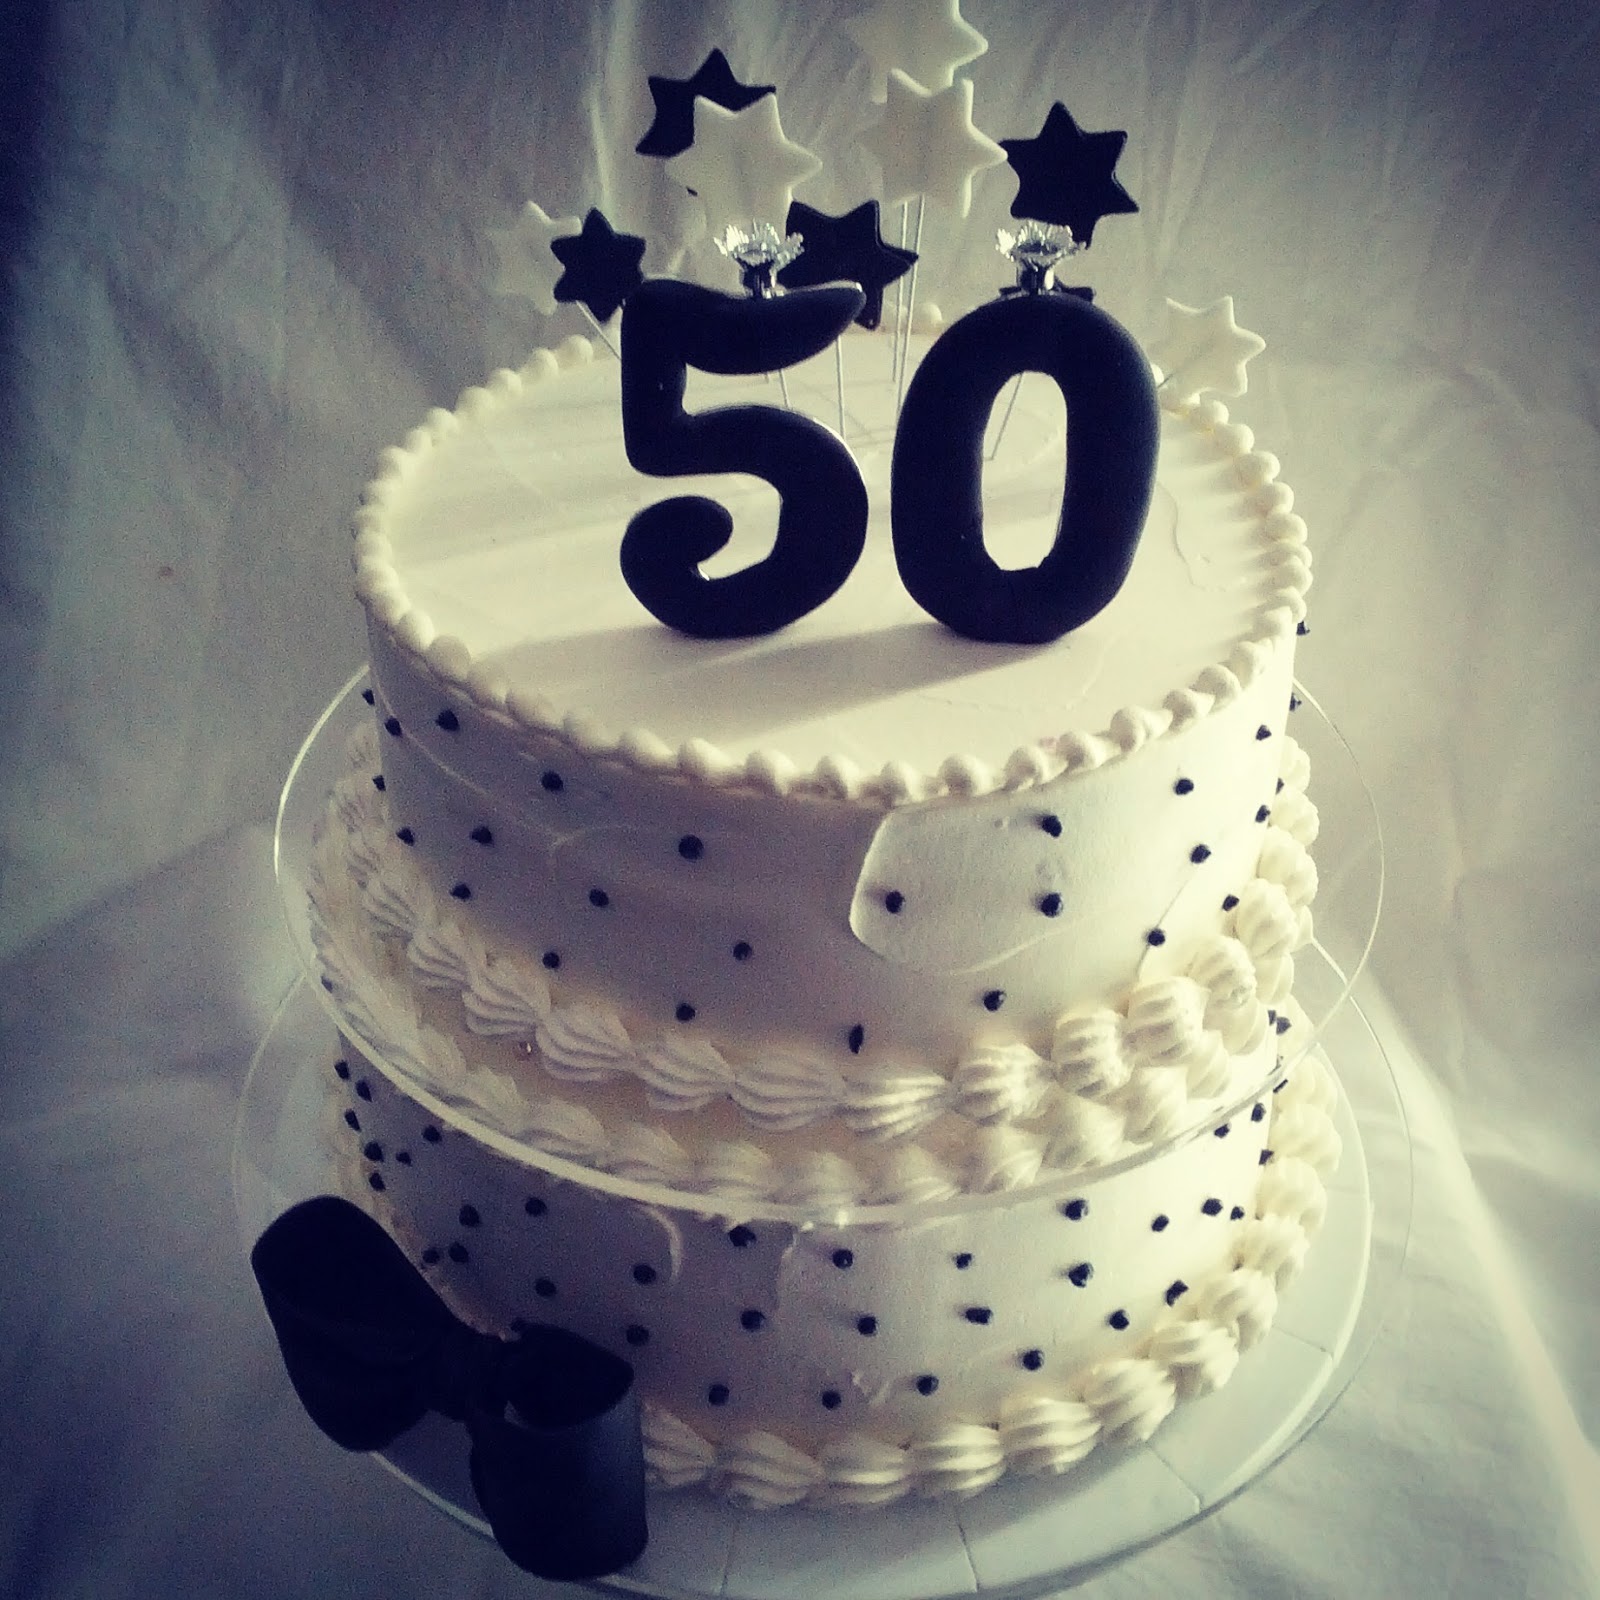 2 Tier 50th Birthday Cake